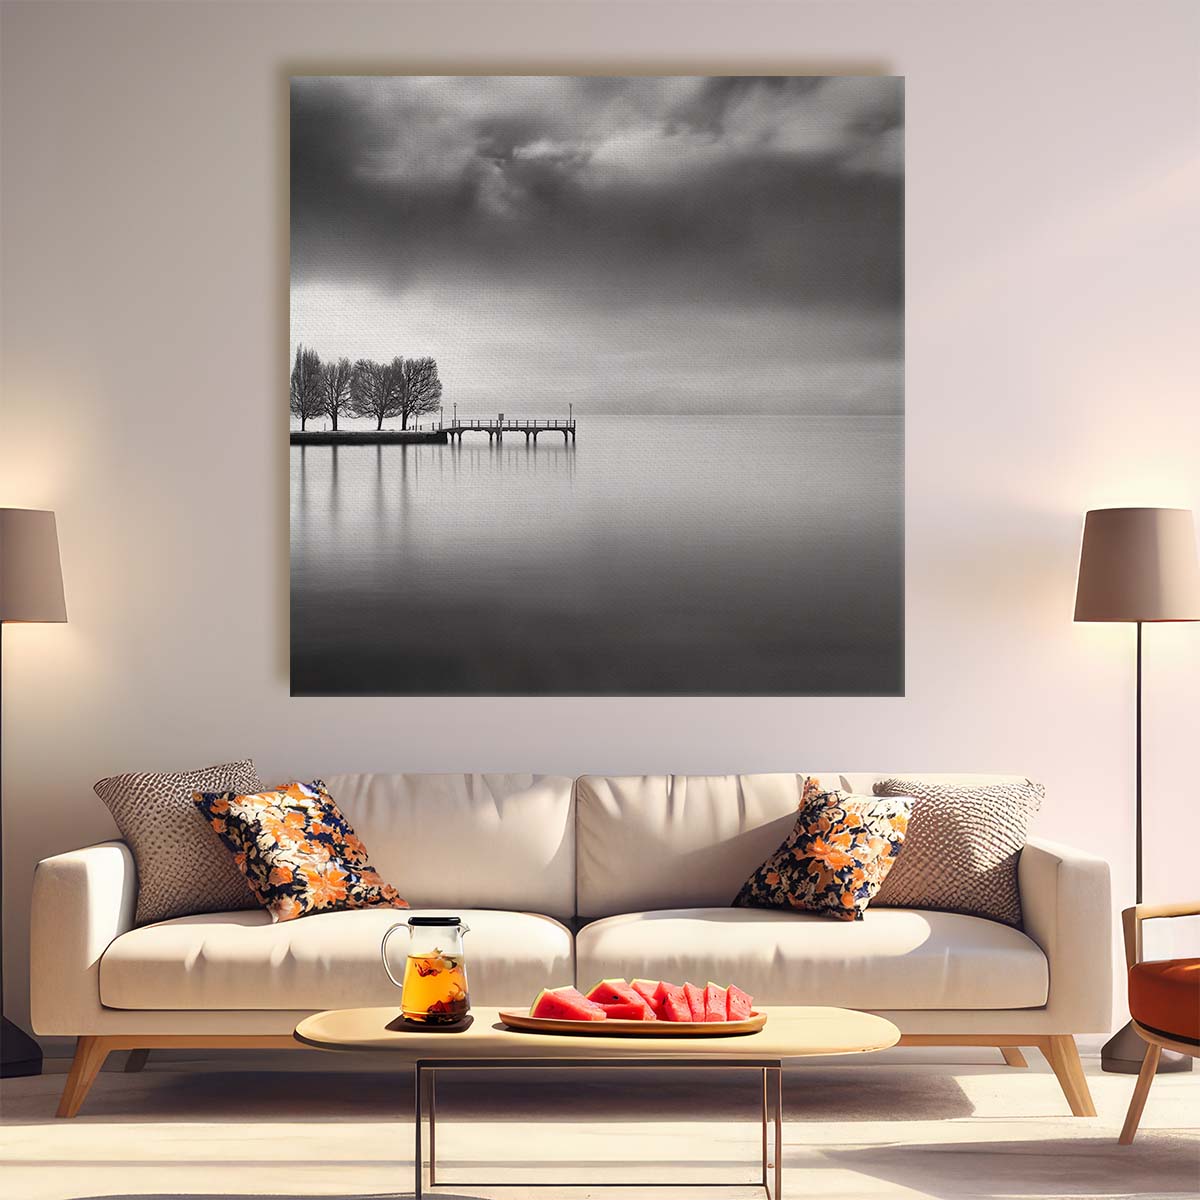 Monochrome Zen Pier Landscape Serene Lake Photography Wall Art by Luxuriance Designs. Made in USA.